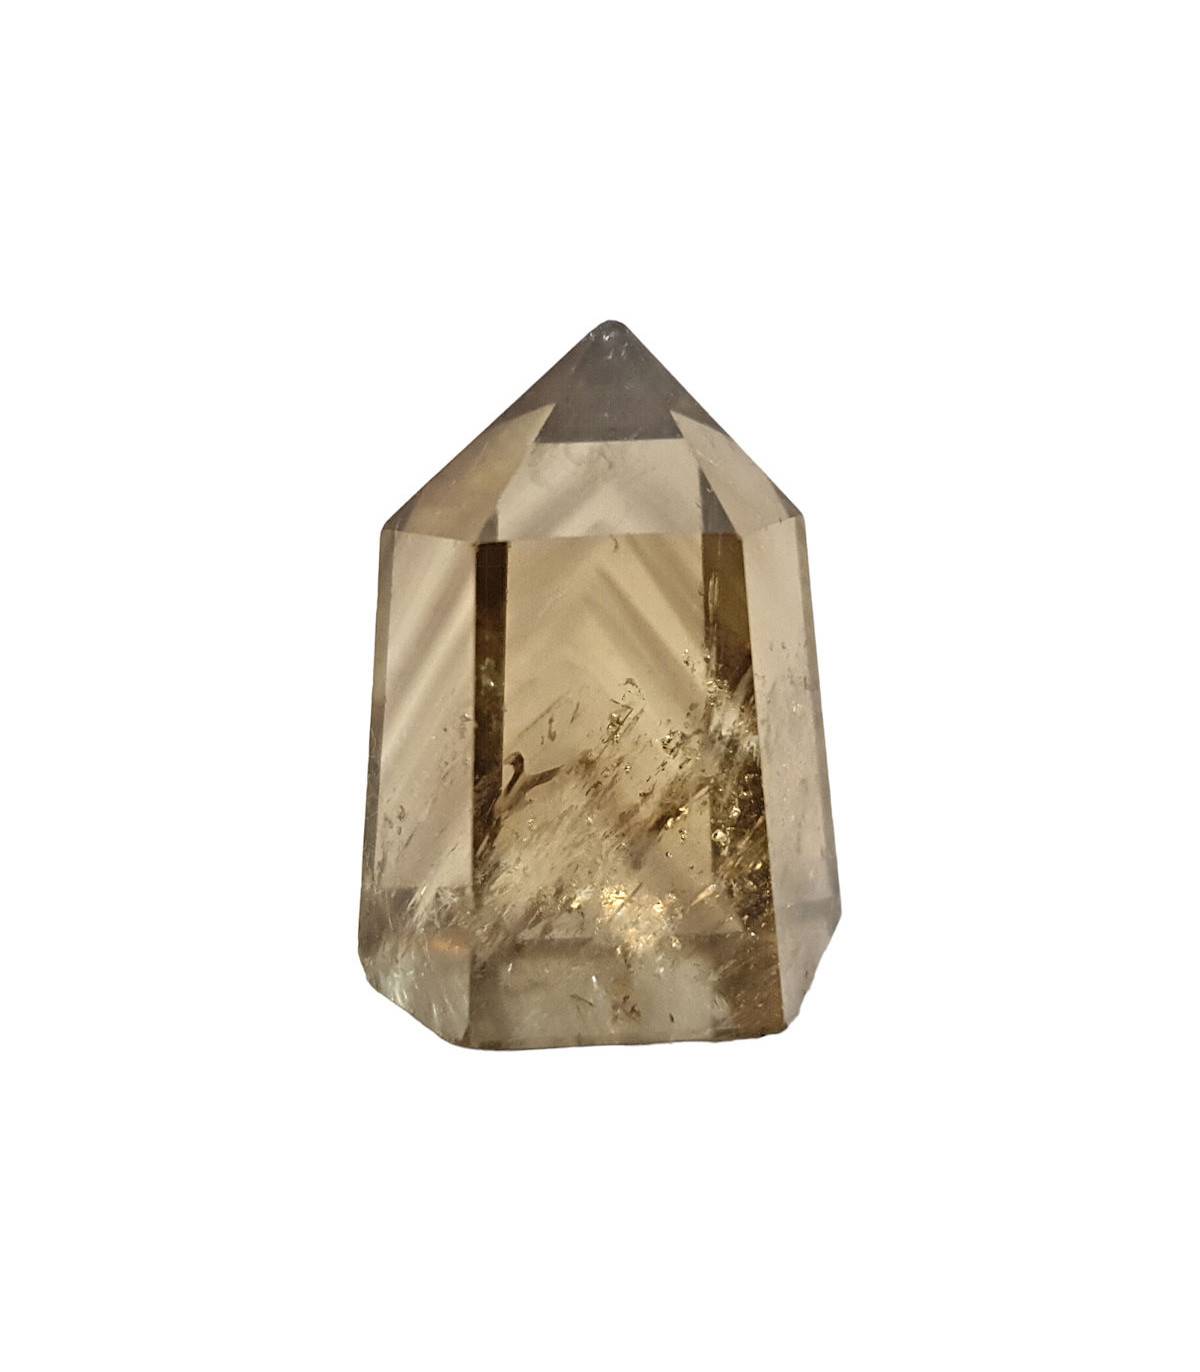 350g Amas de cristaux de quartz fumé, Vug de cristal de quartz